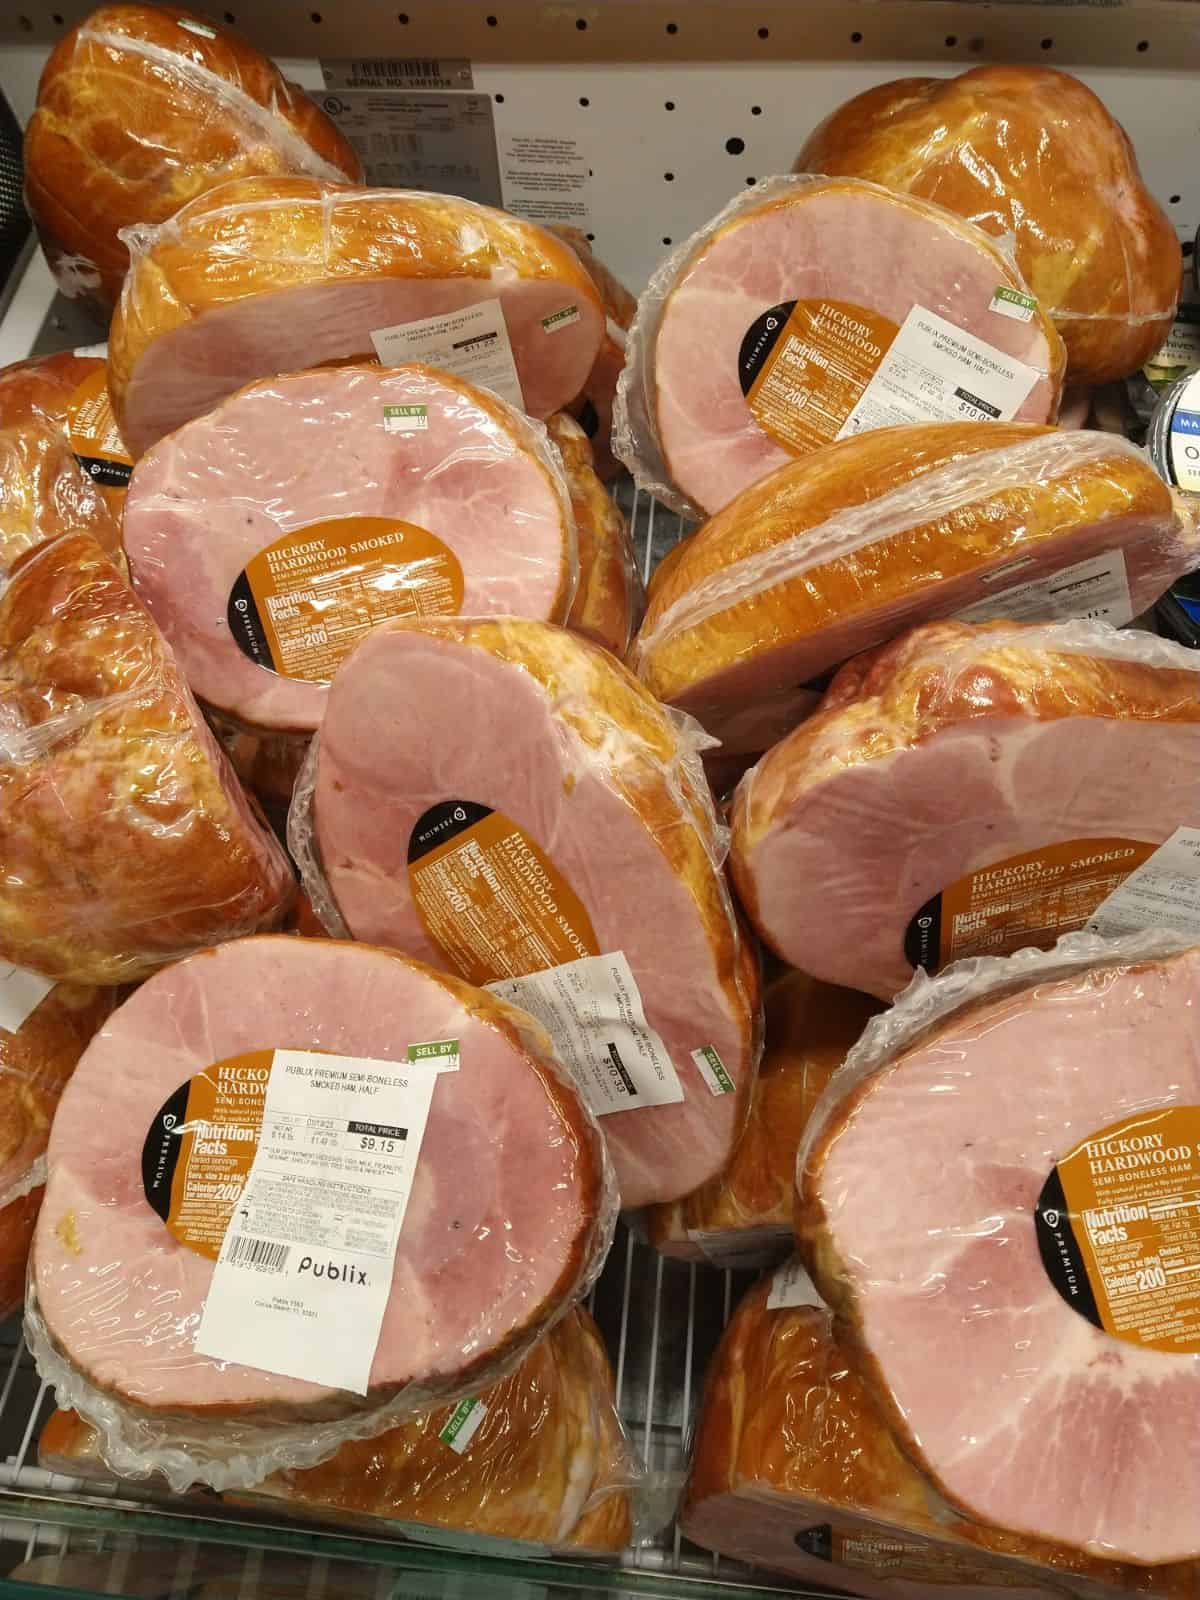 Publix brand Semi-boneless hickory smoked hams on display.